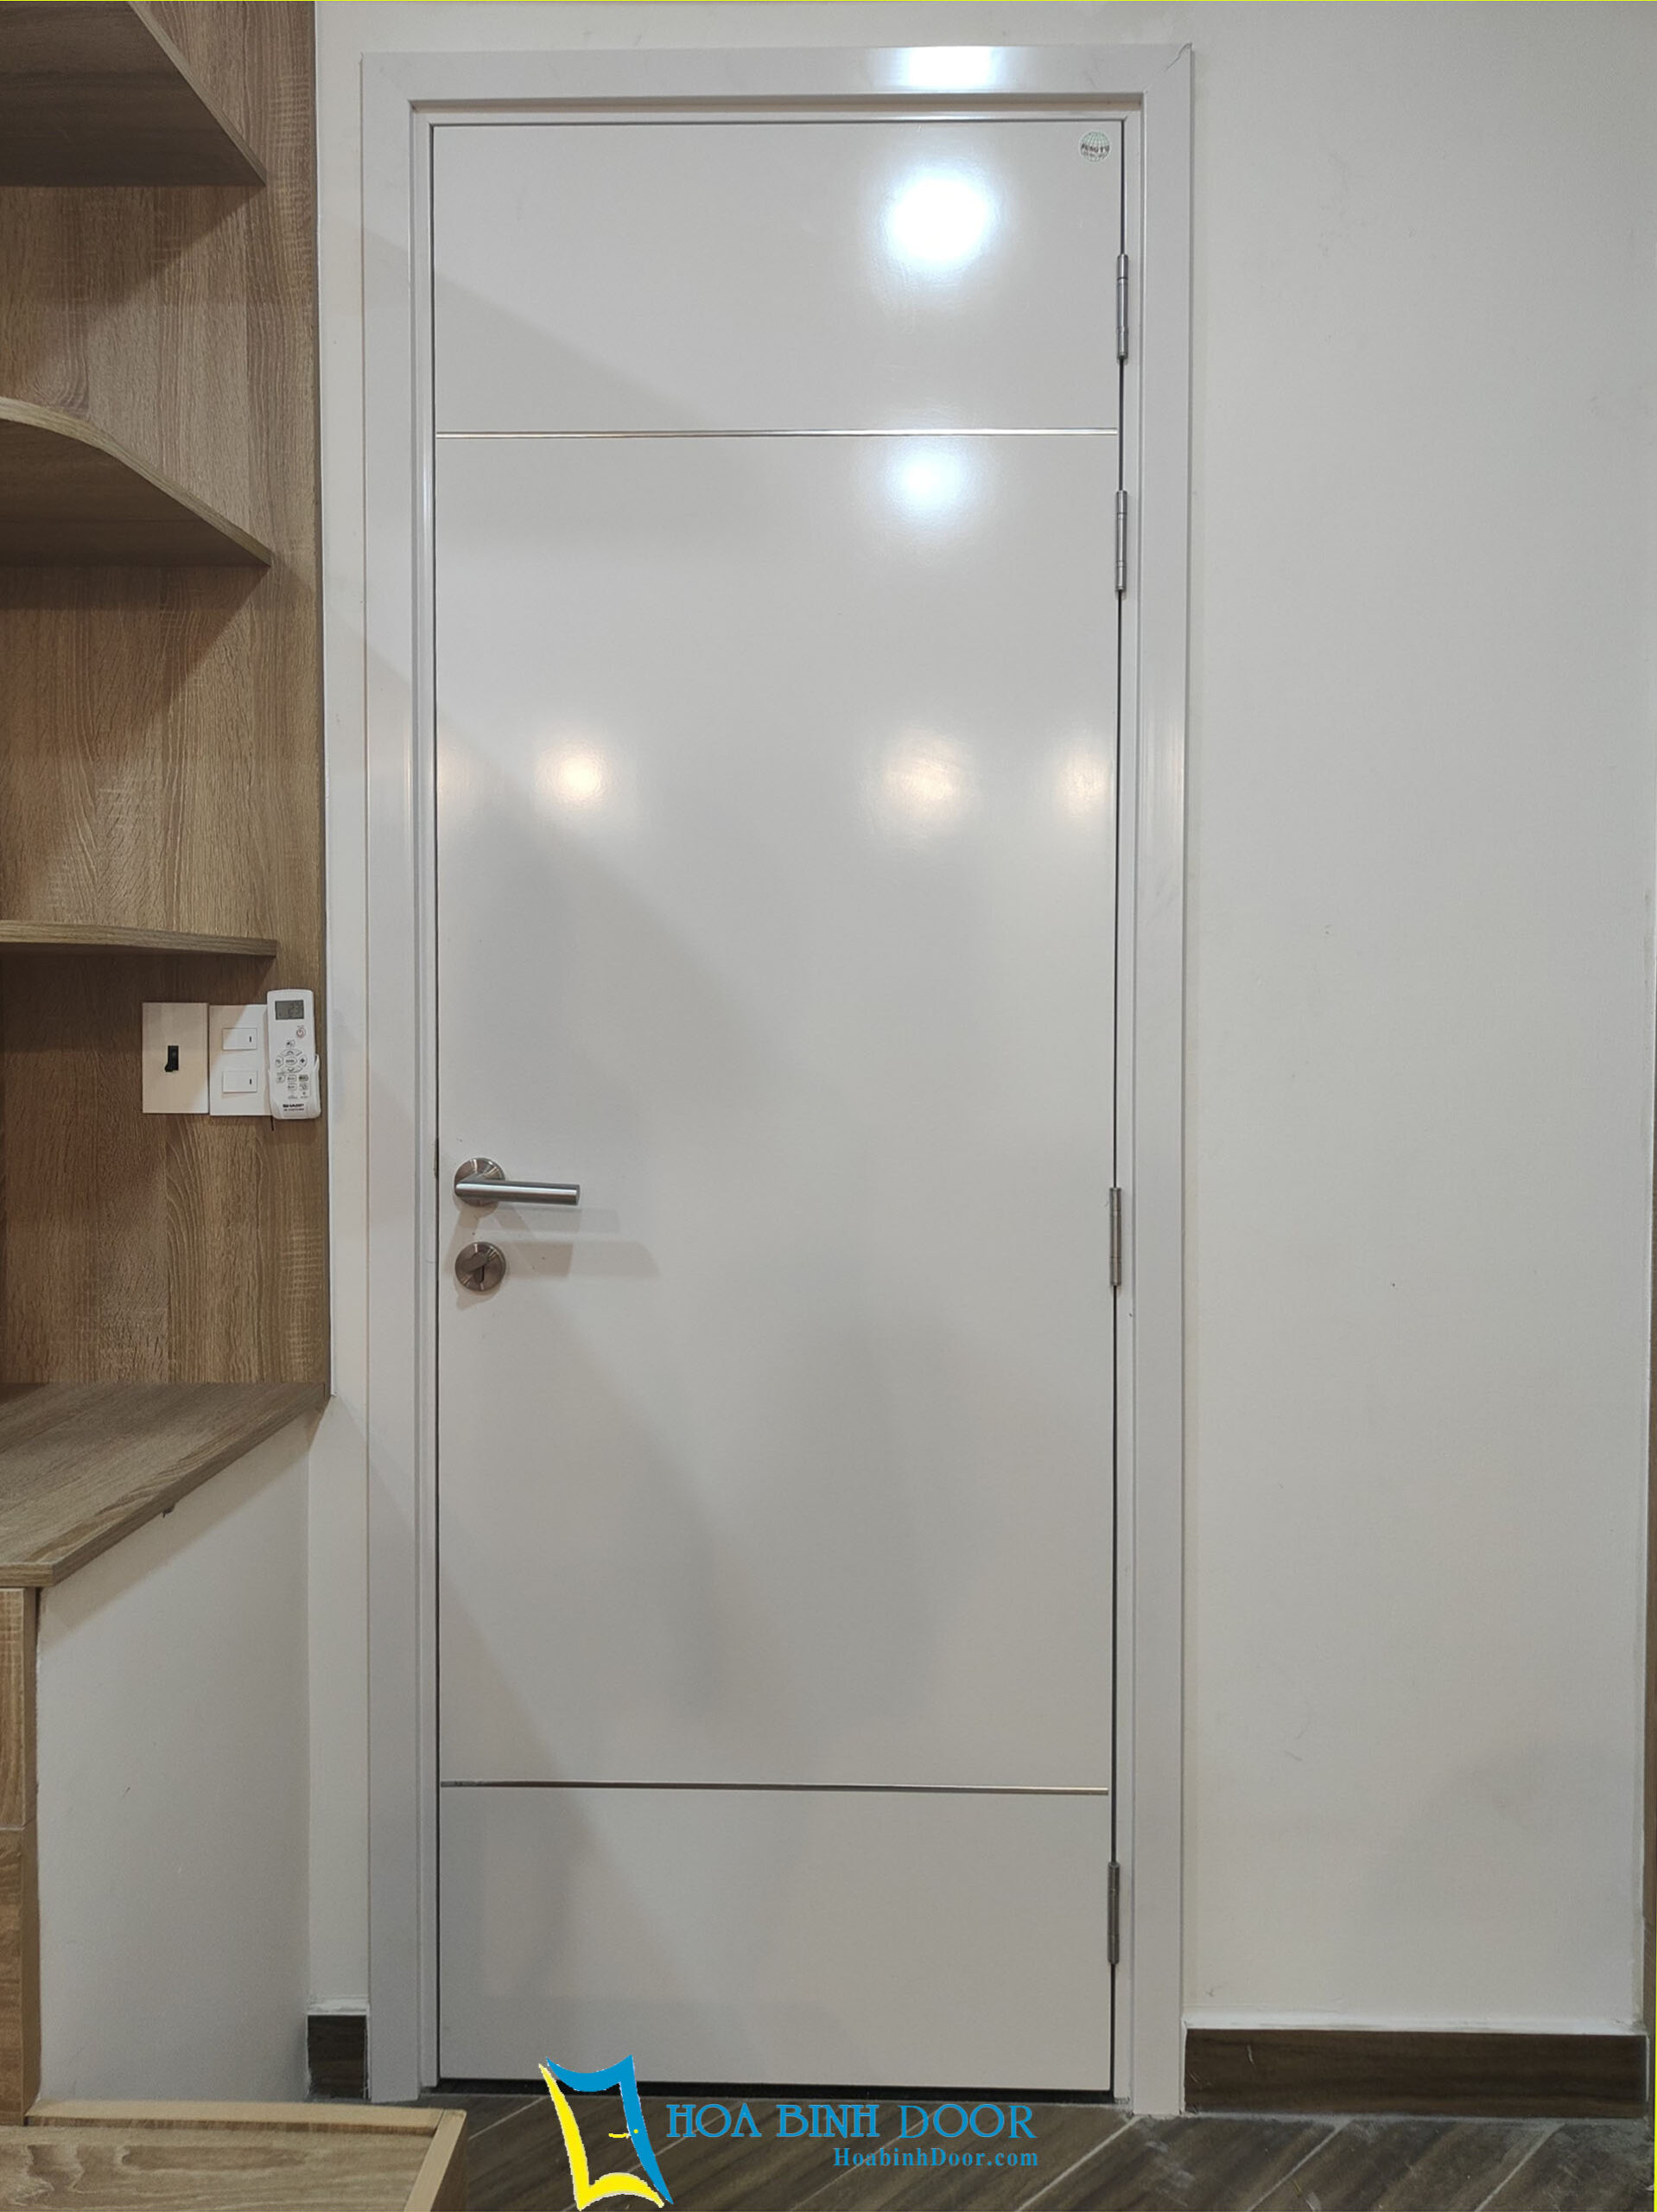 Nội, ngoại thất: Mẫu cửa thông phòng composite đẹp – Nhựa gỗ composite cao cấp Cua-nhua-composite-1-scaled